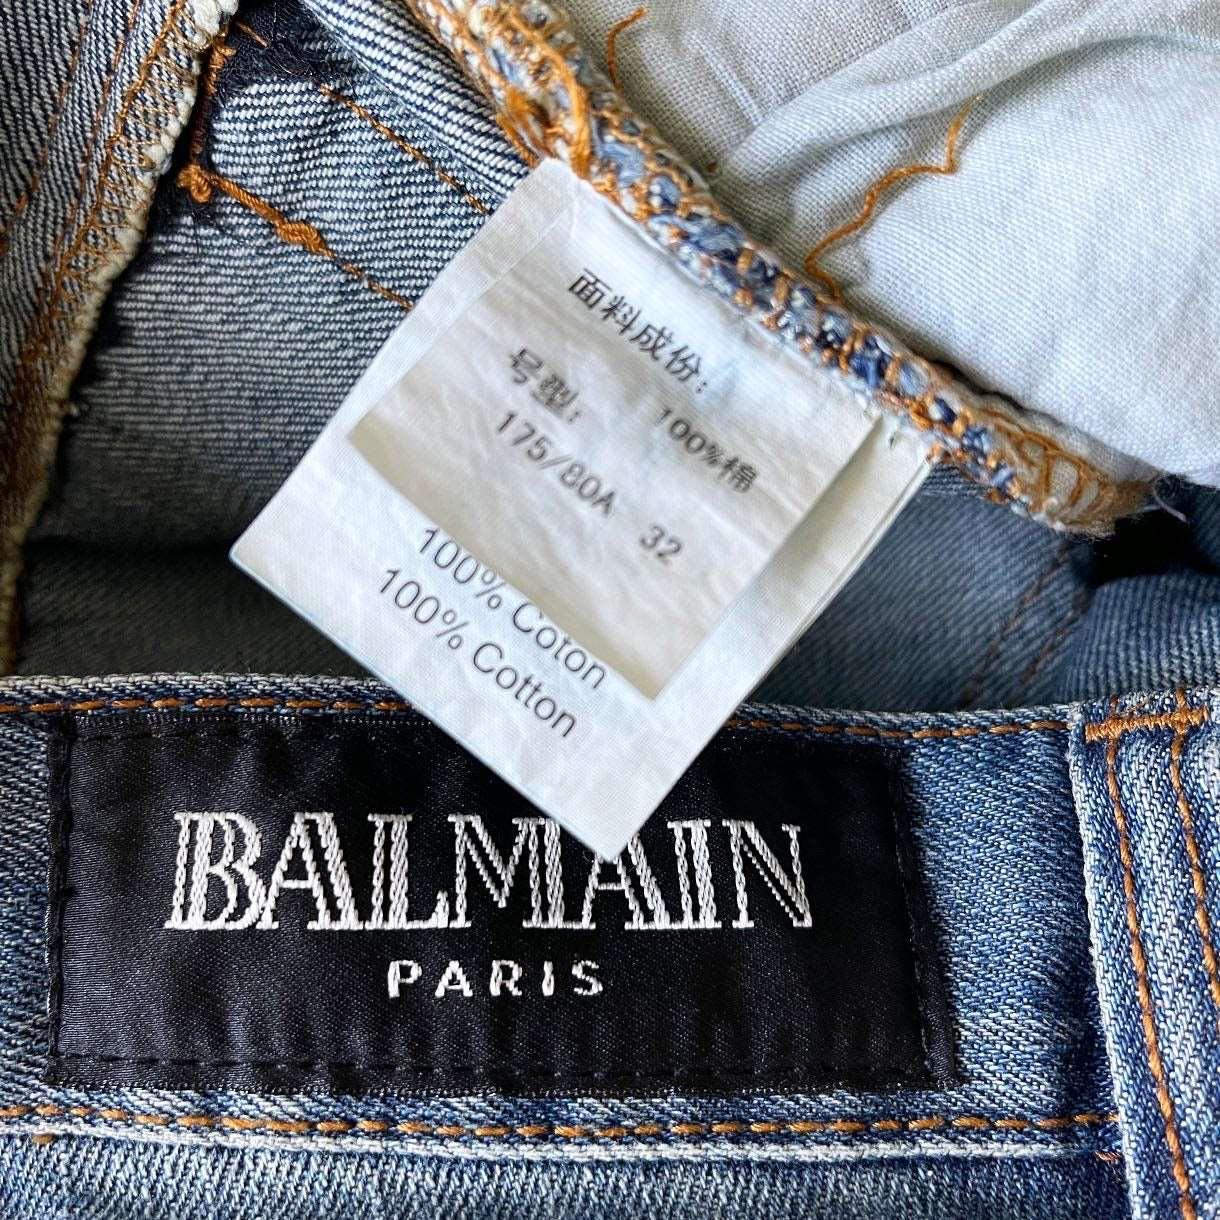 BALMAIN - BALMAIN Jeans - AVVIIVVA.COM